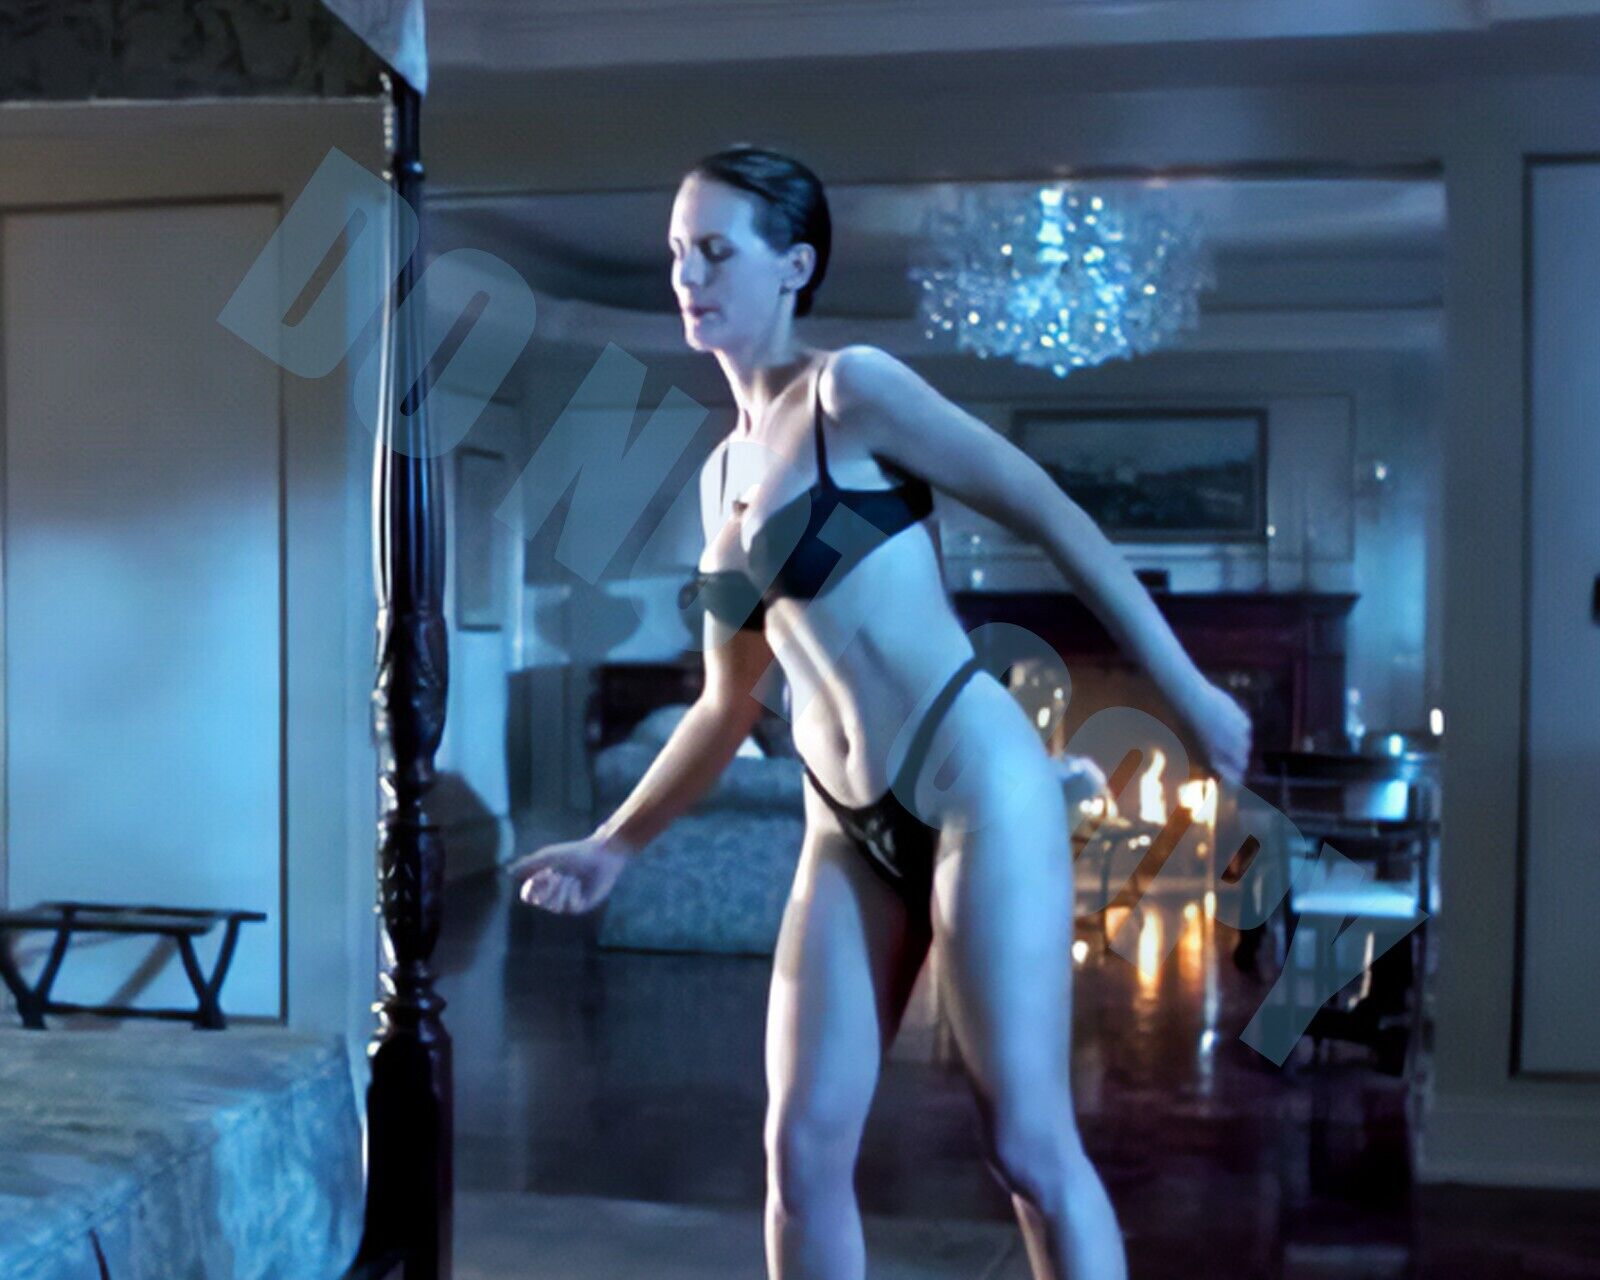 Jamie Lee Curtis True Lies Bra Panty Hotel Bedroom Stripper Scene -A- 8x10 Photo